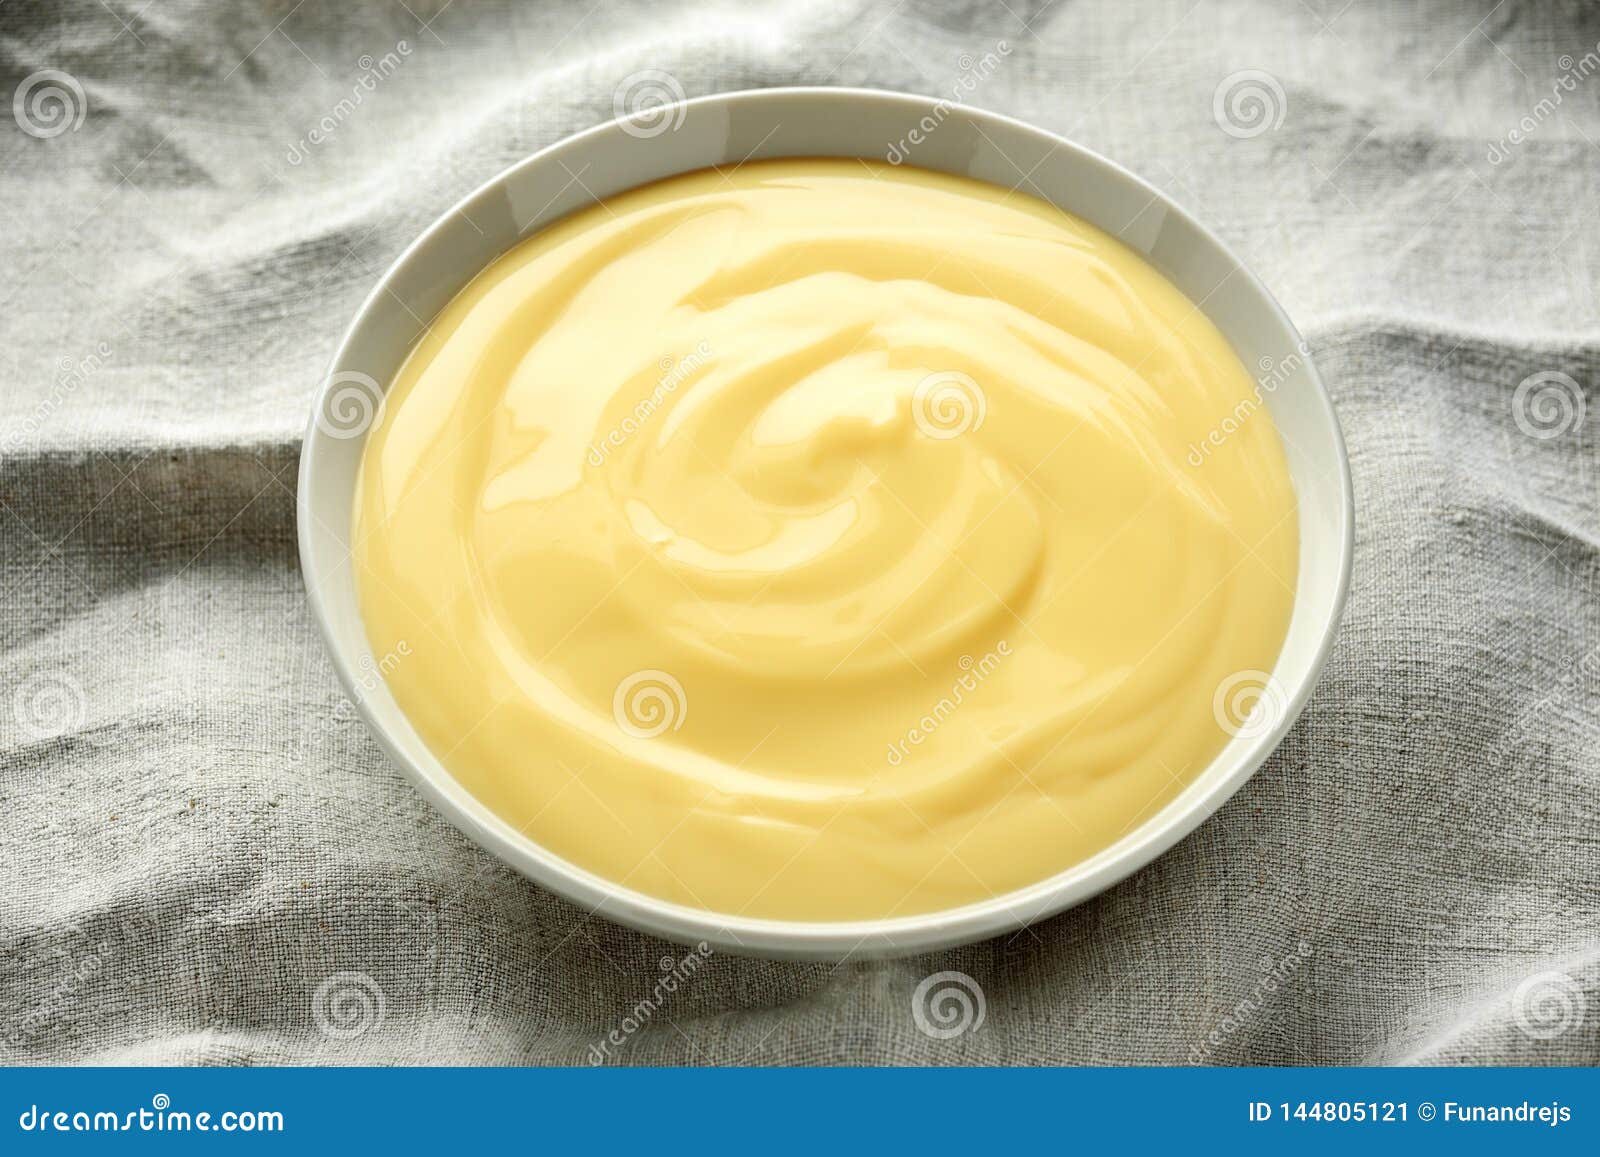 bowl of vanilla custard on rustic background